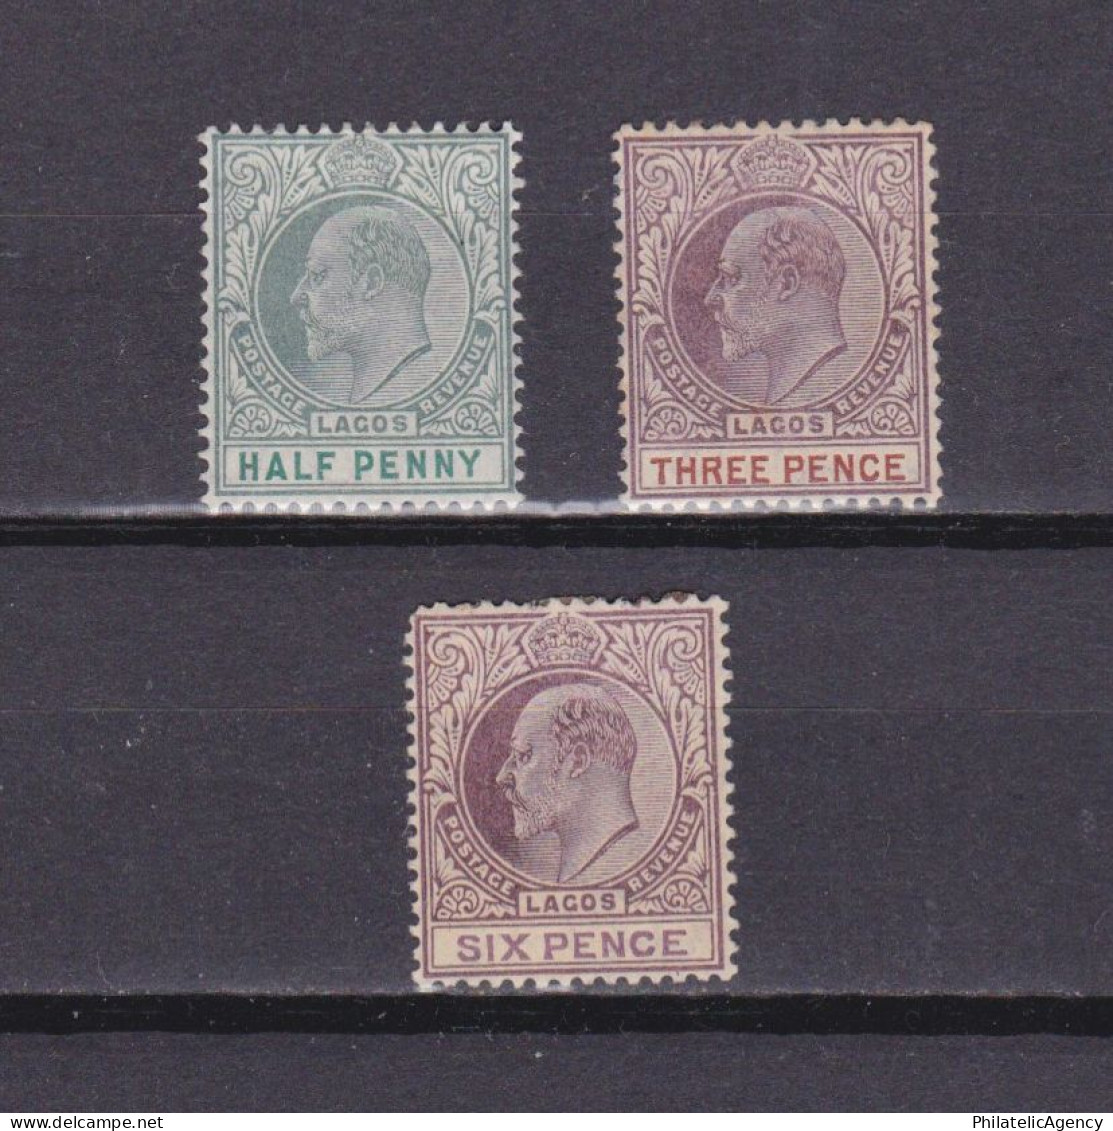 LAGOS 1904, SG #54-59, CV £20, Part Set, Wmk Mult Crown CA, MH - Nigeria (...-1960)